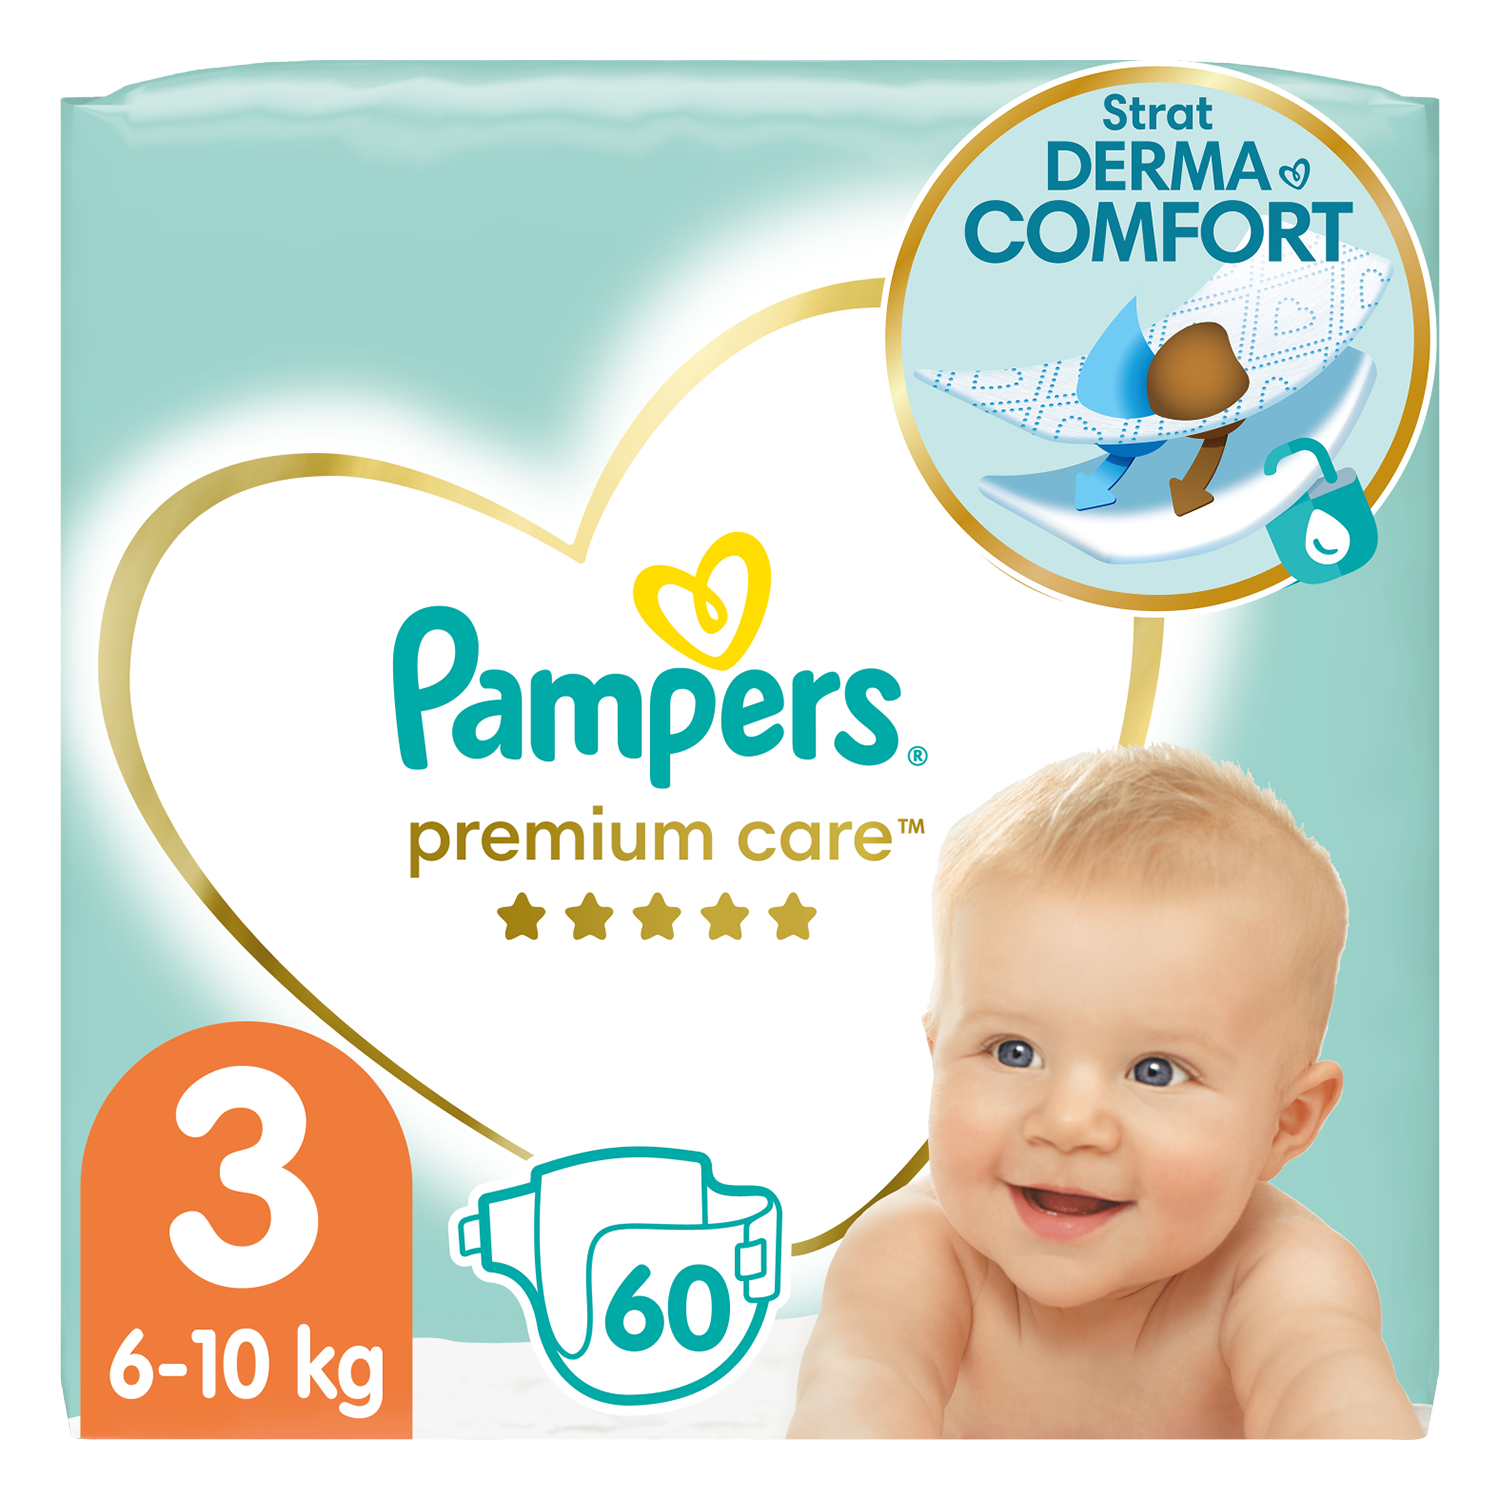 gemini pampers new baby 2 premium care